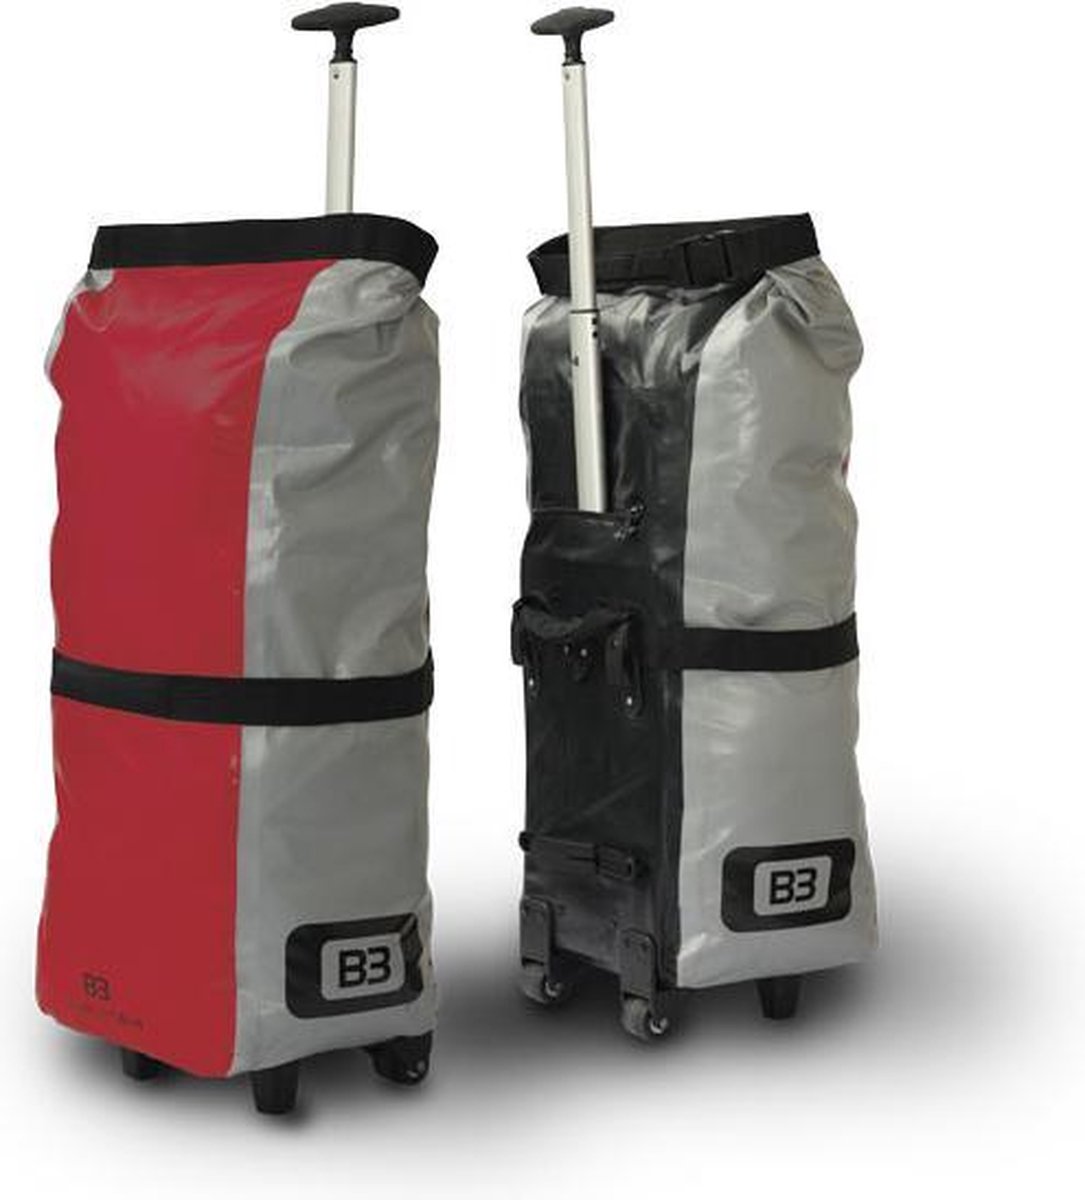 B3bag extra grote waterdichte trolley - 2 bags - 68 - rood/grijs | bol.com